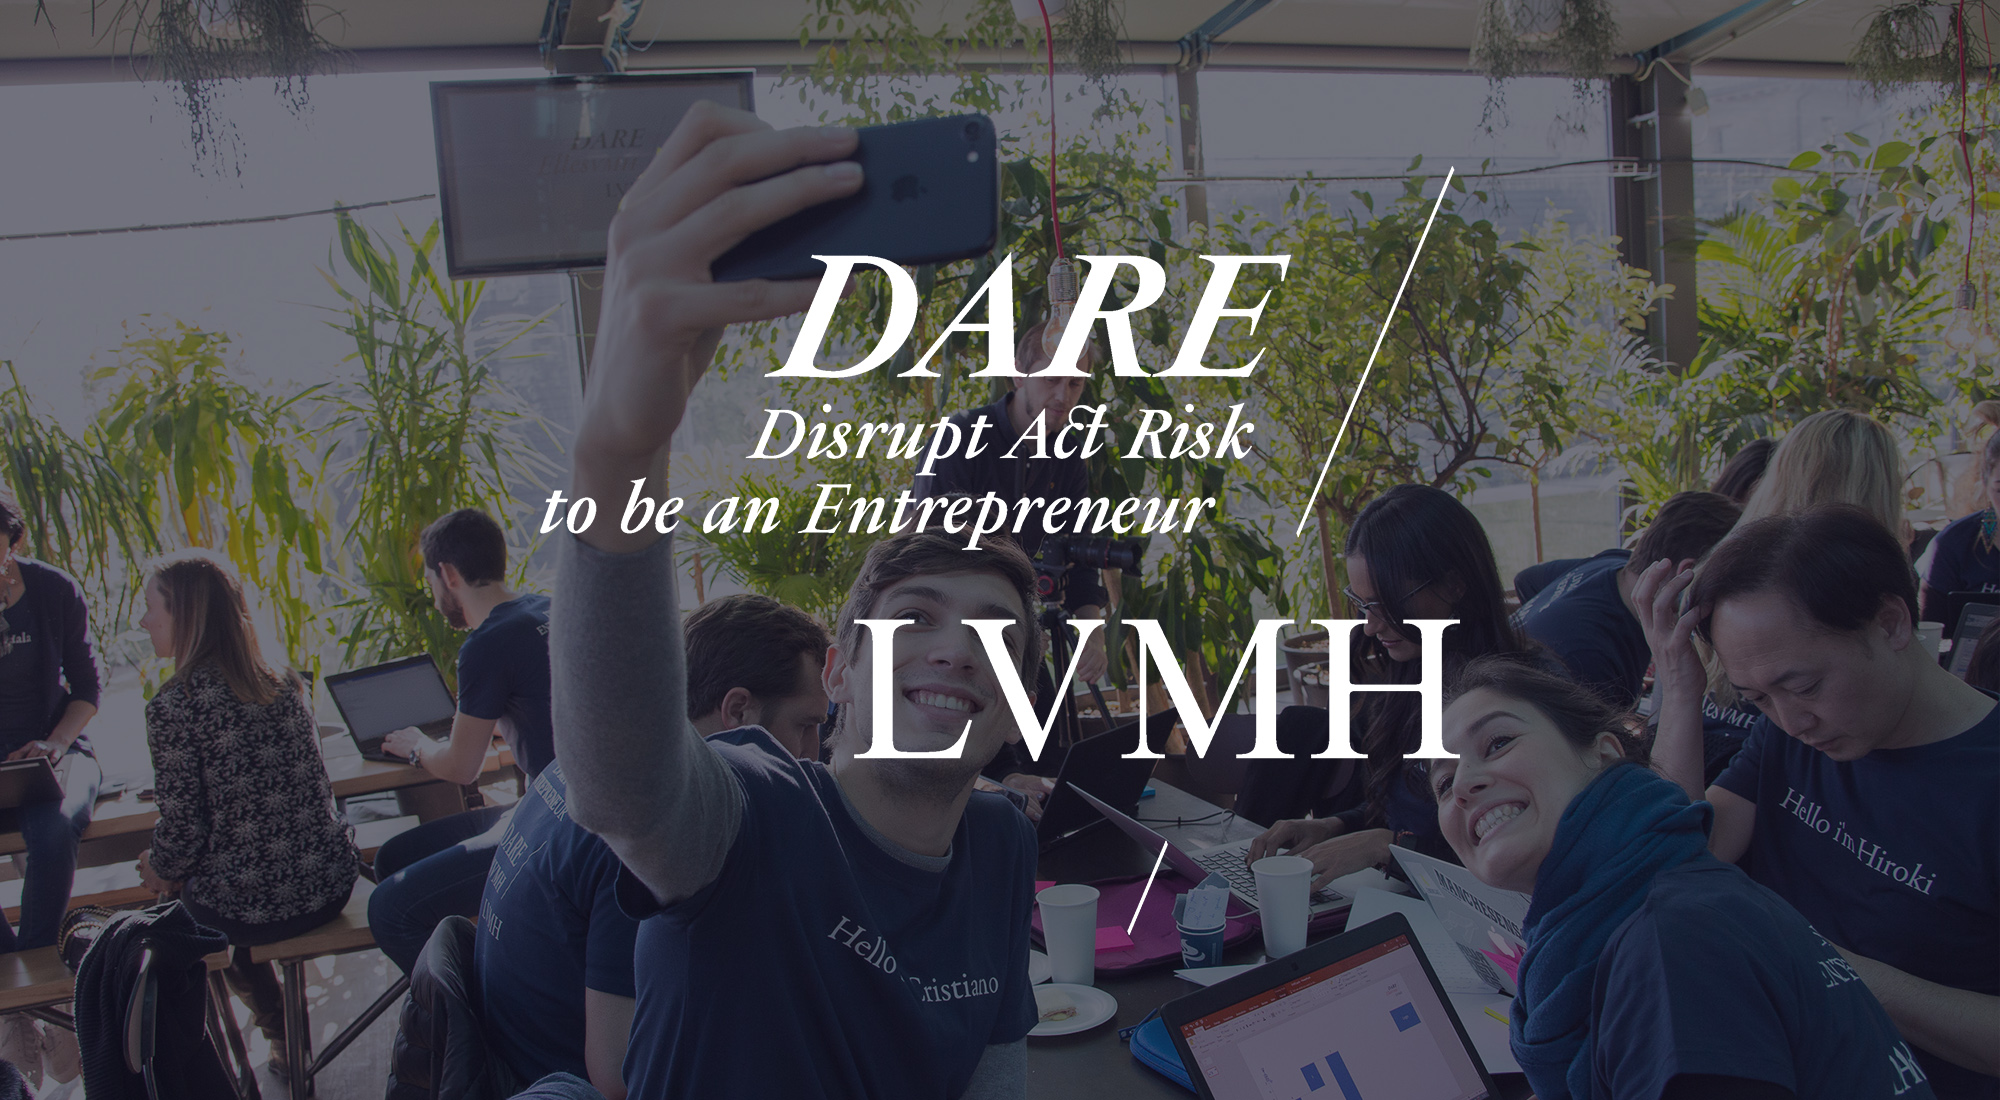 LVMH program DARE taps talents for cutting-edge innovation - LVMH